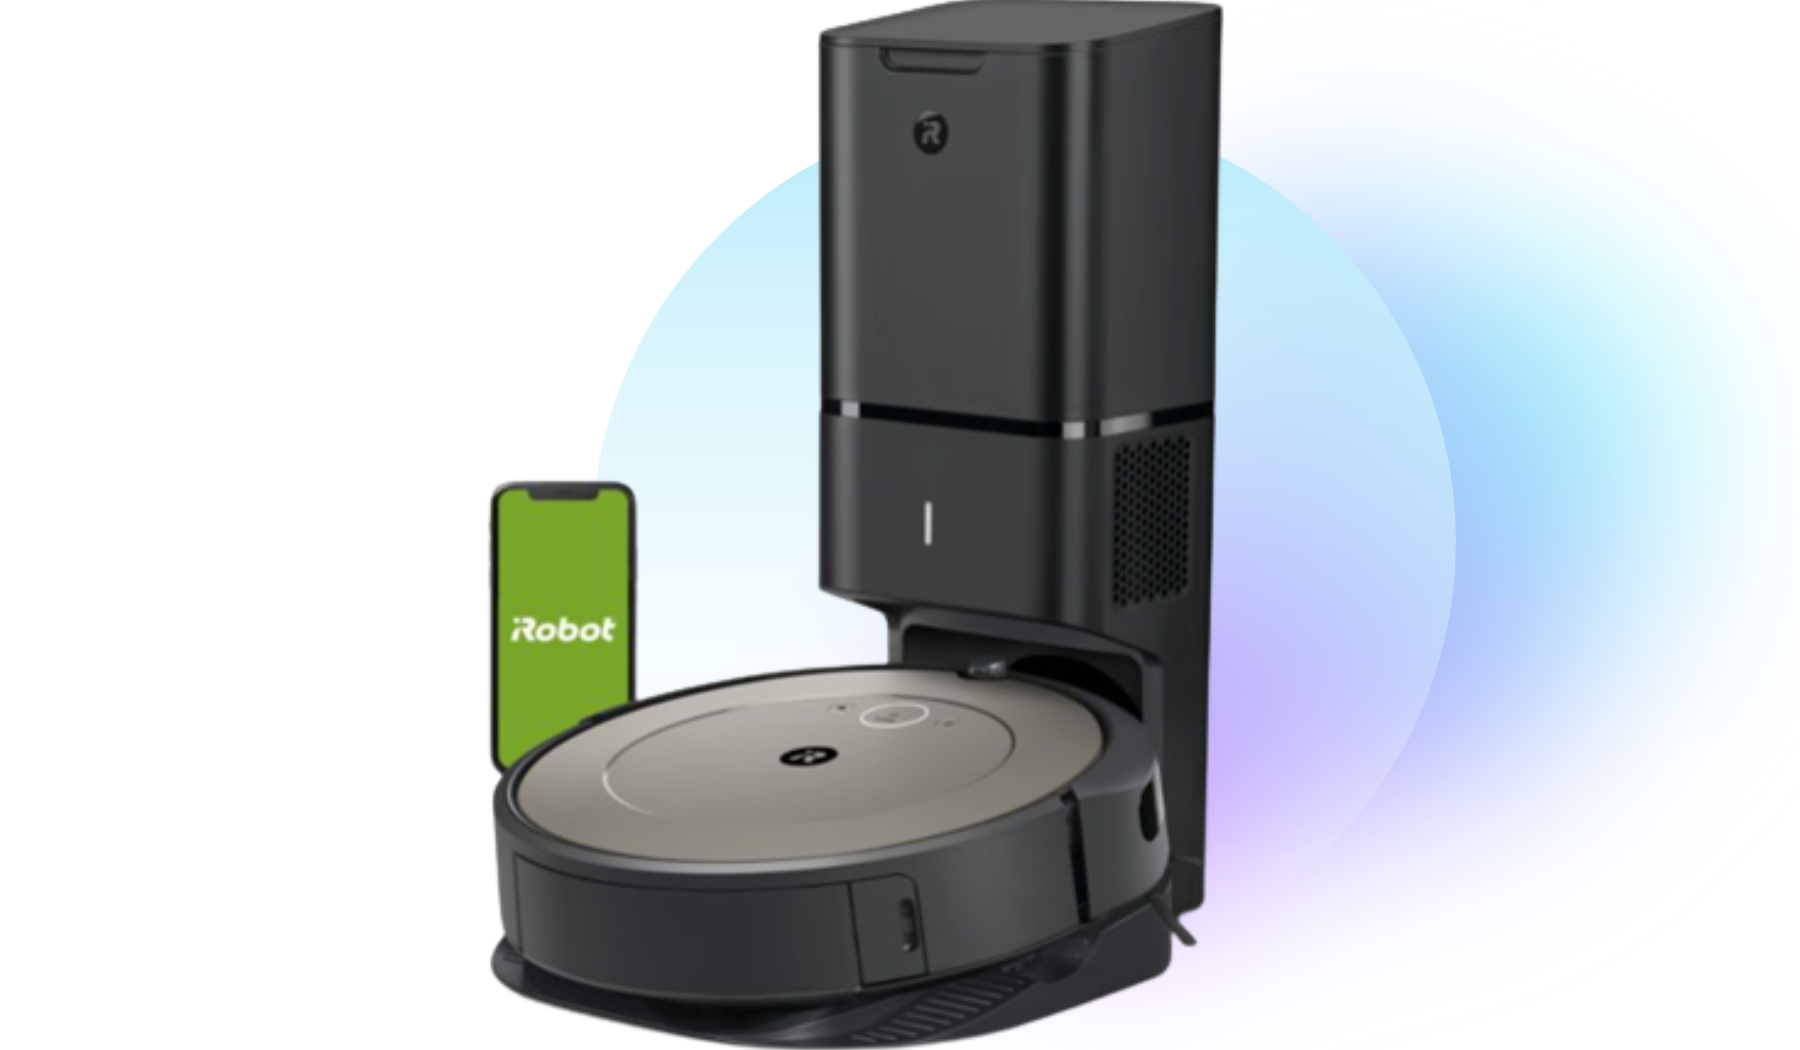 iRobot Roomba i1+ and smartphone on green iRobot screen